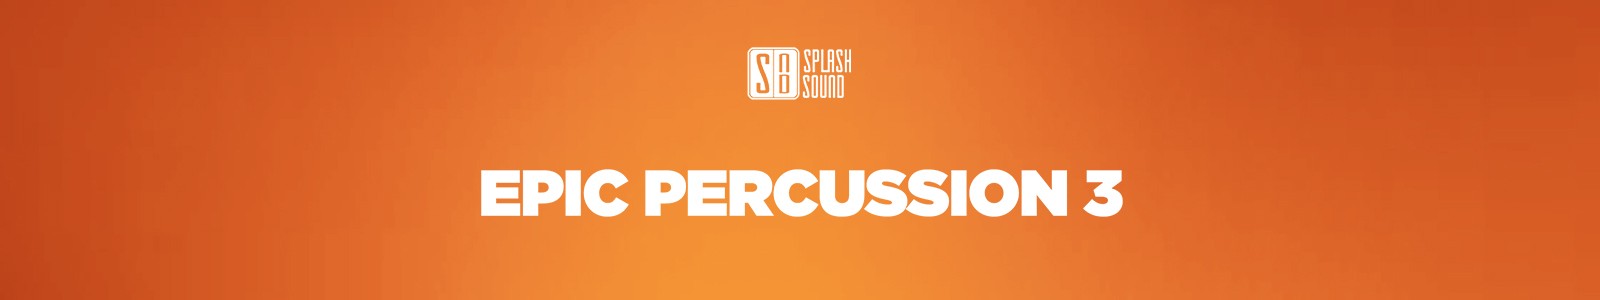 Epic Percussion 3 by Splash Sound